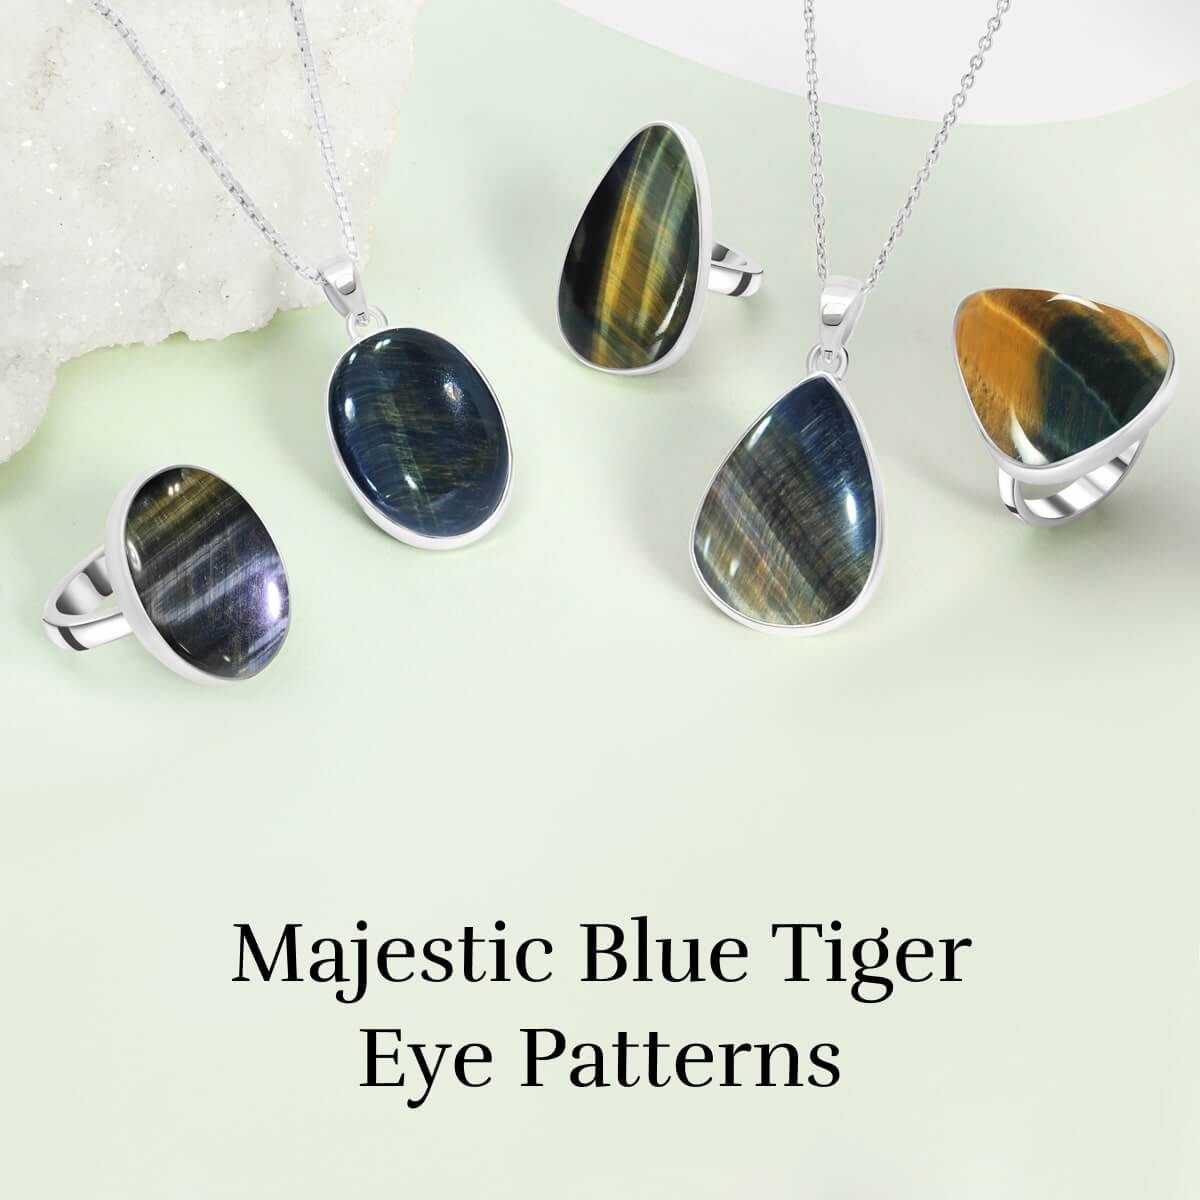 The Magic of Blue Tiger Eye Jewelry